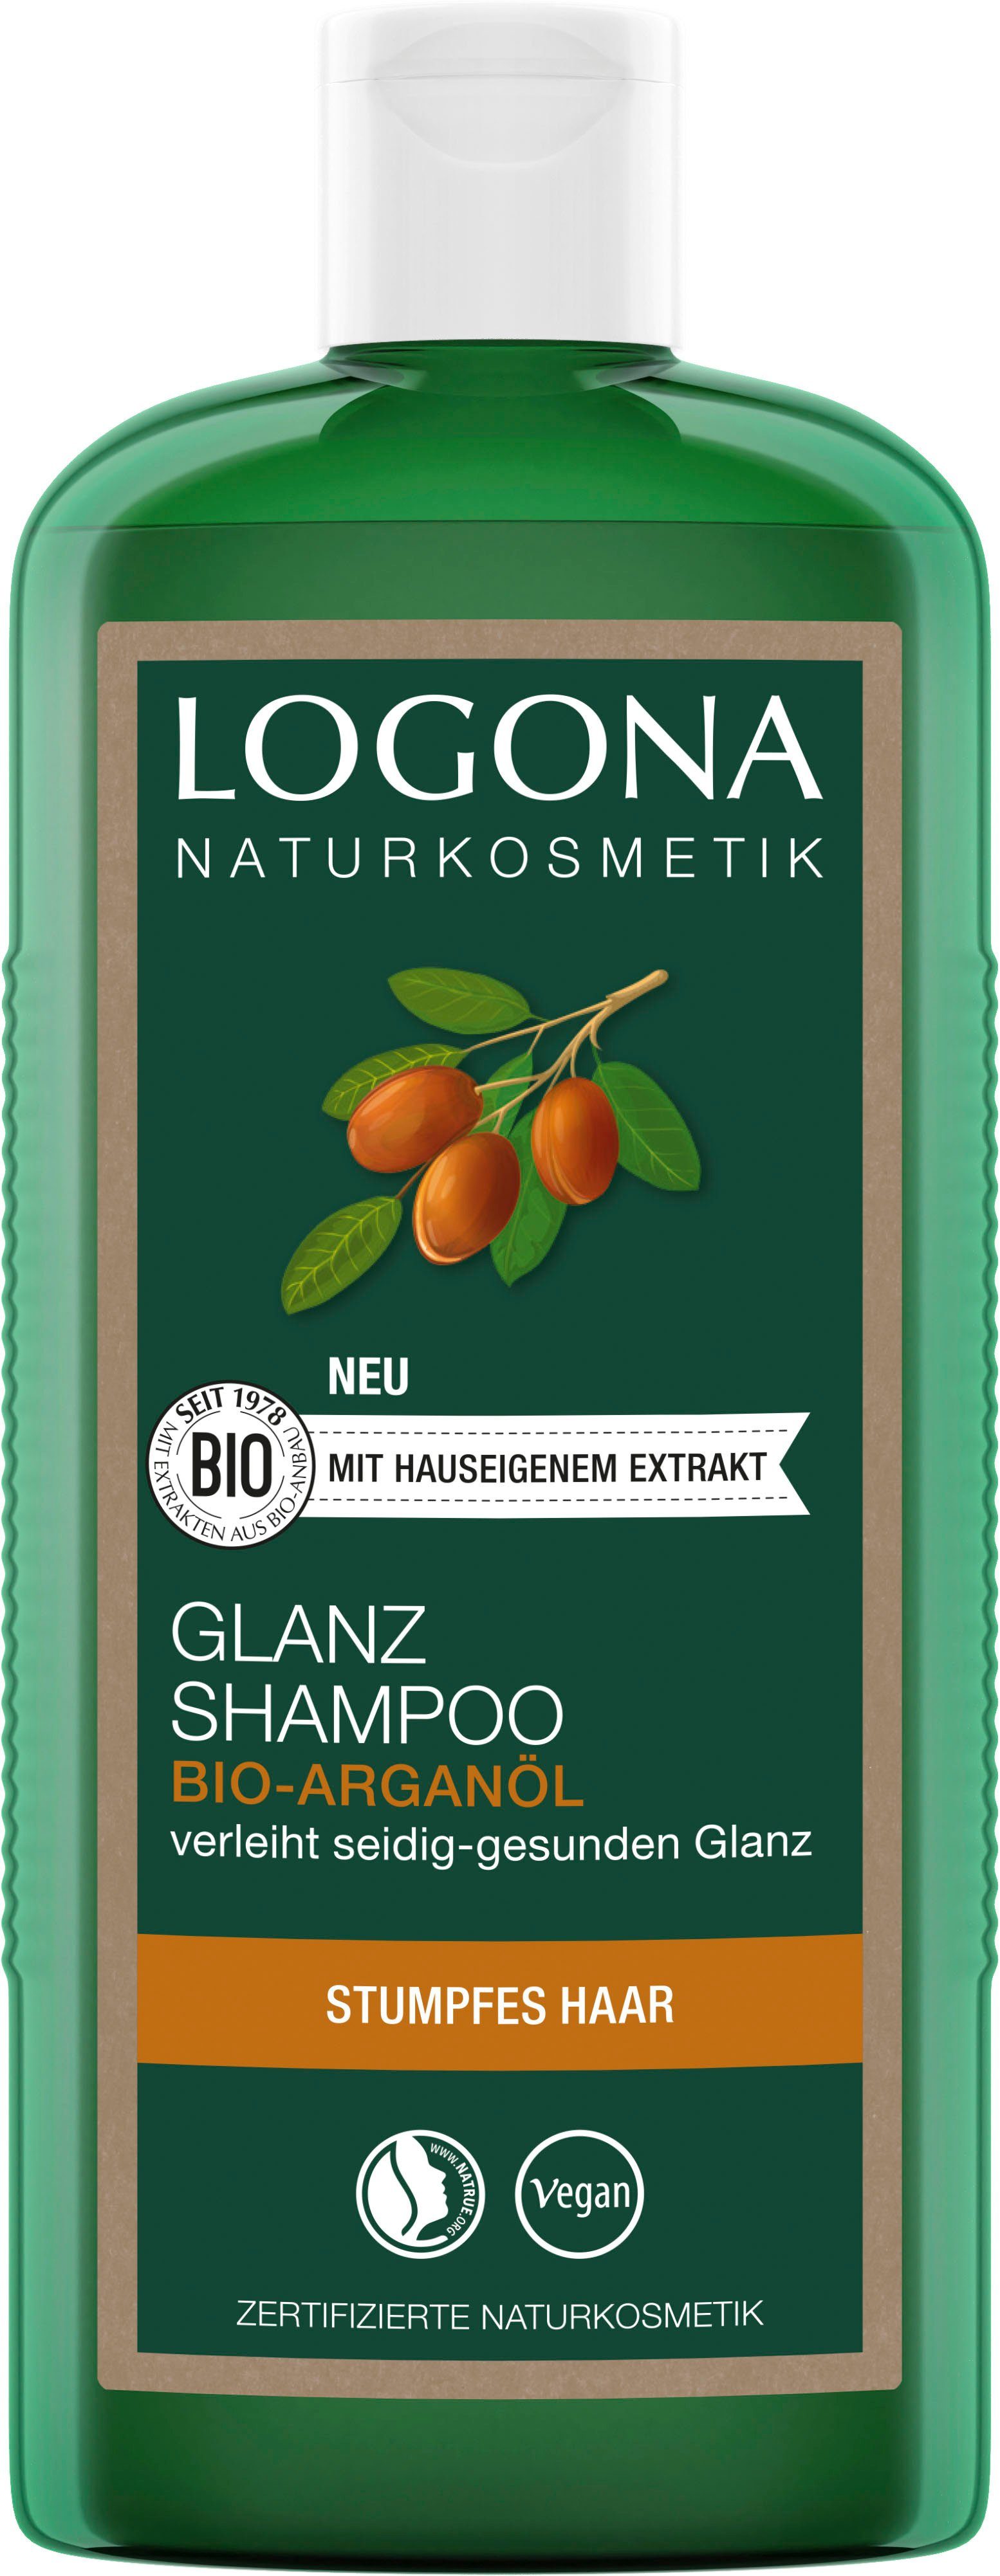 Logona LOGONA Bio-Arganöl Glanz Haarshampoo Shampoo